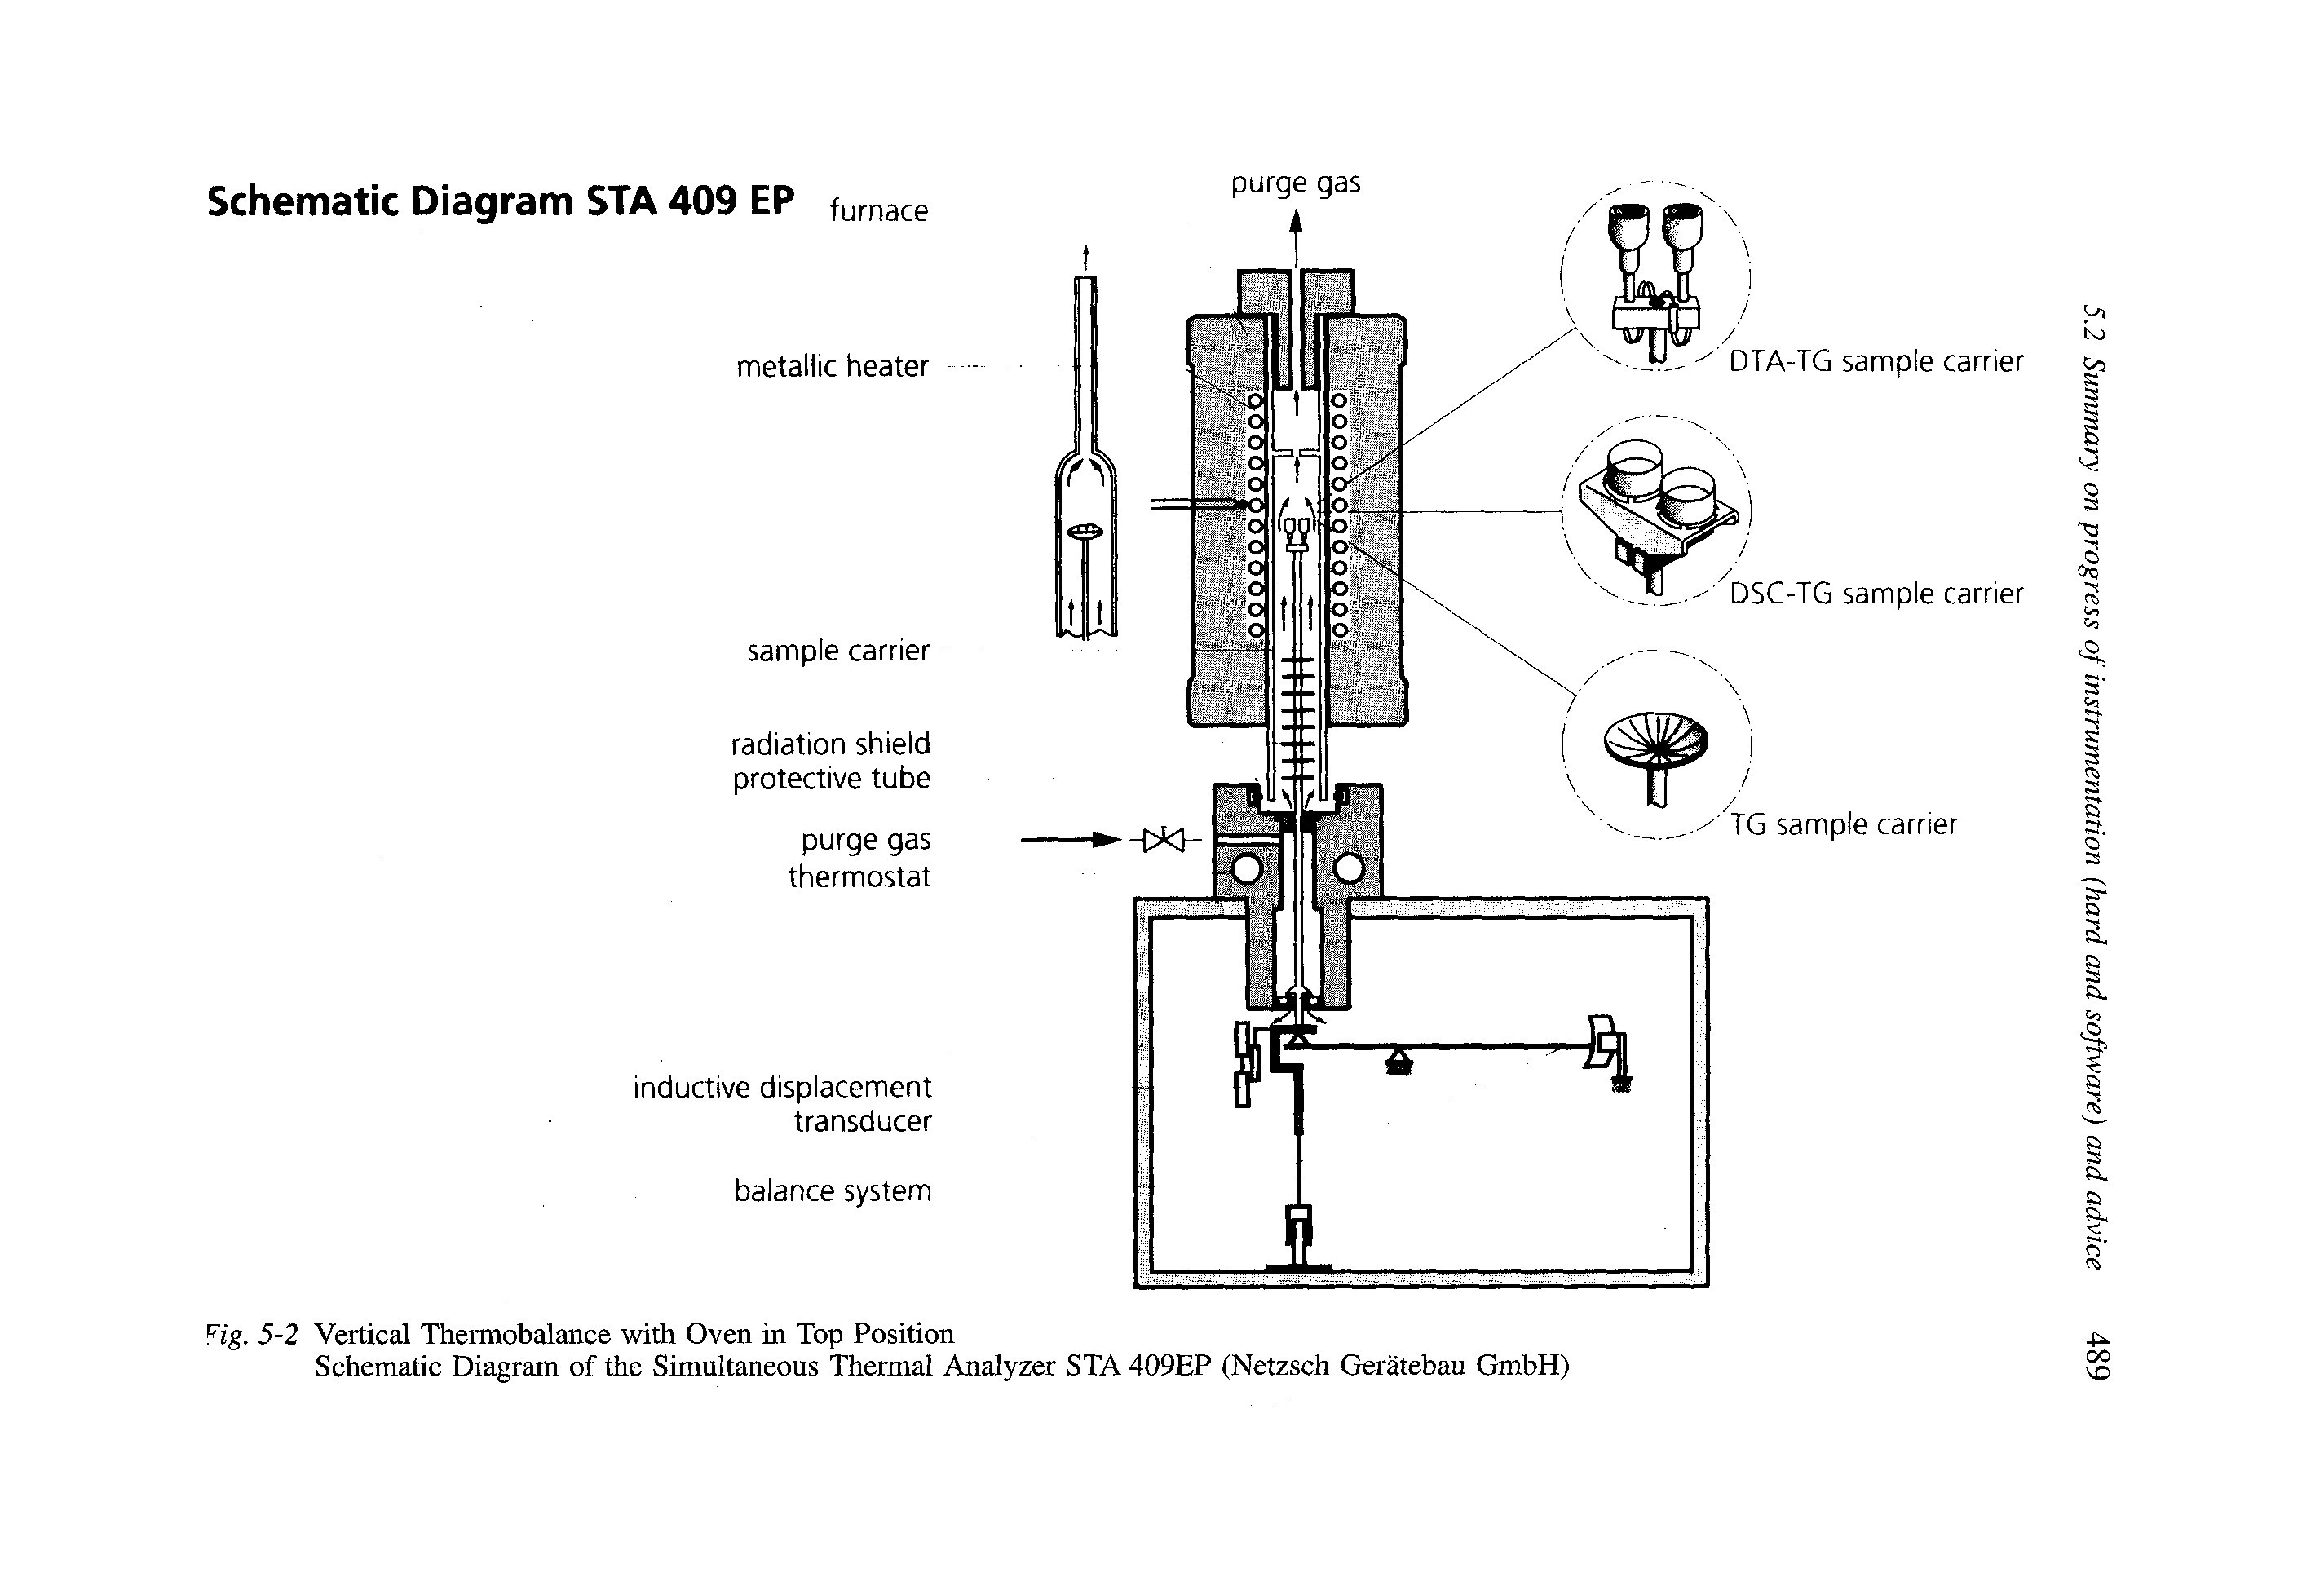 Schematic Diagram of the Simultaneous Thermal Analyzer STA 409EP (Netzsch Geratebau GmbH)...